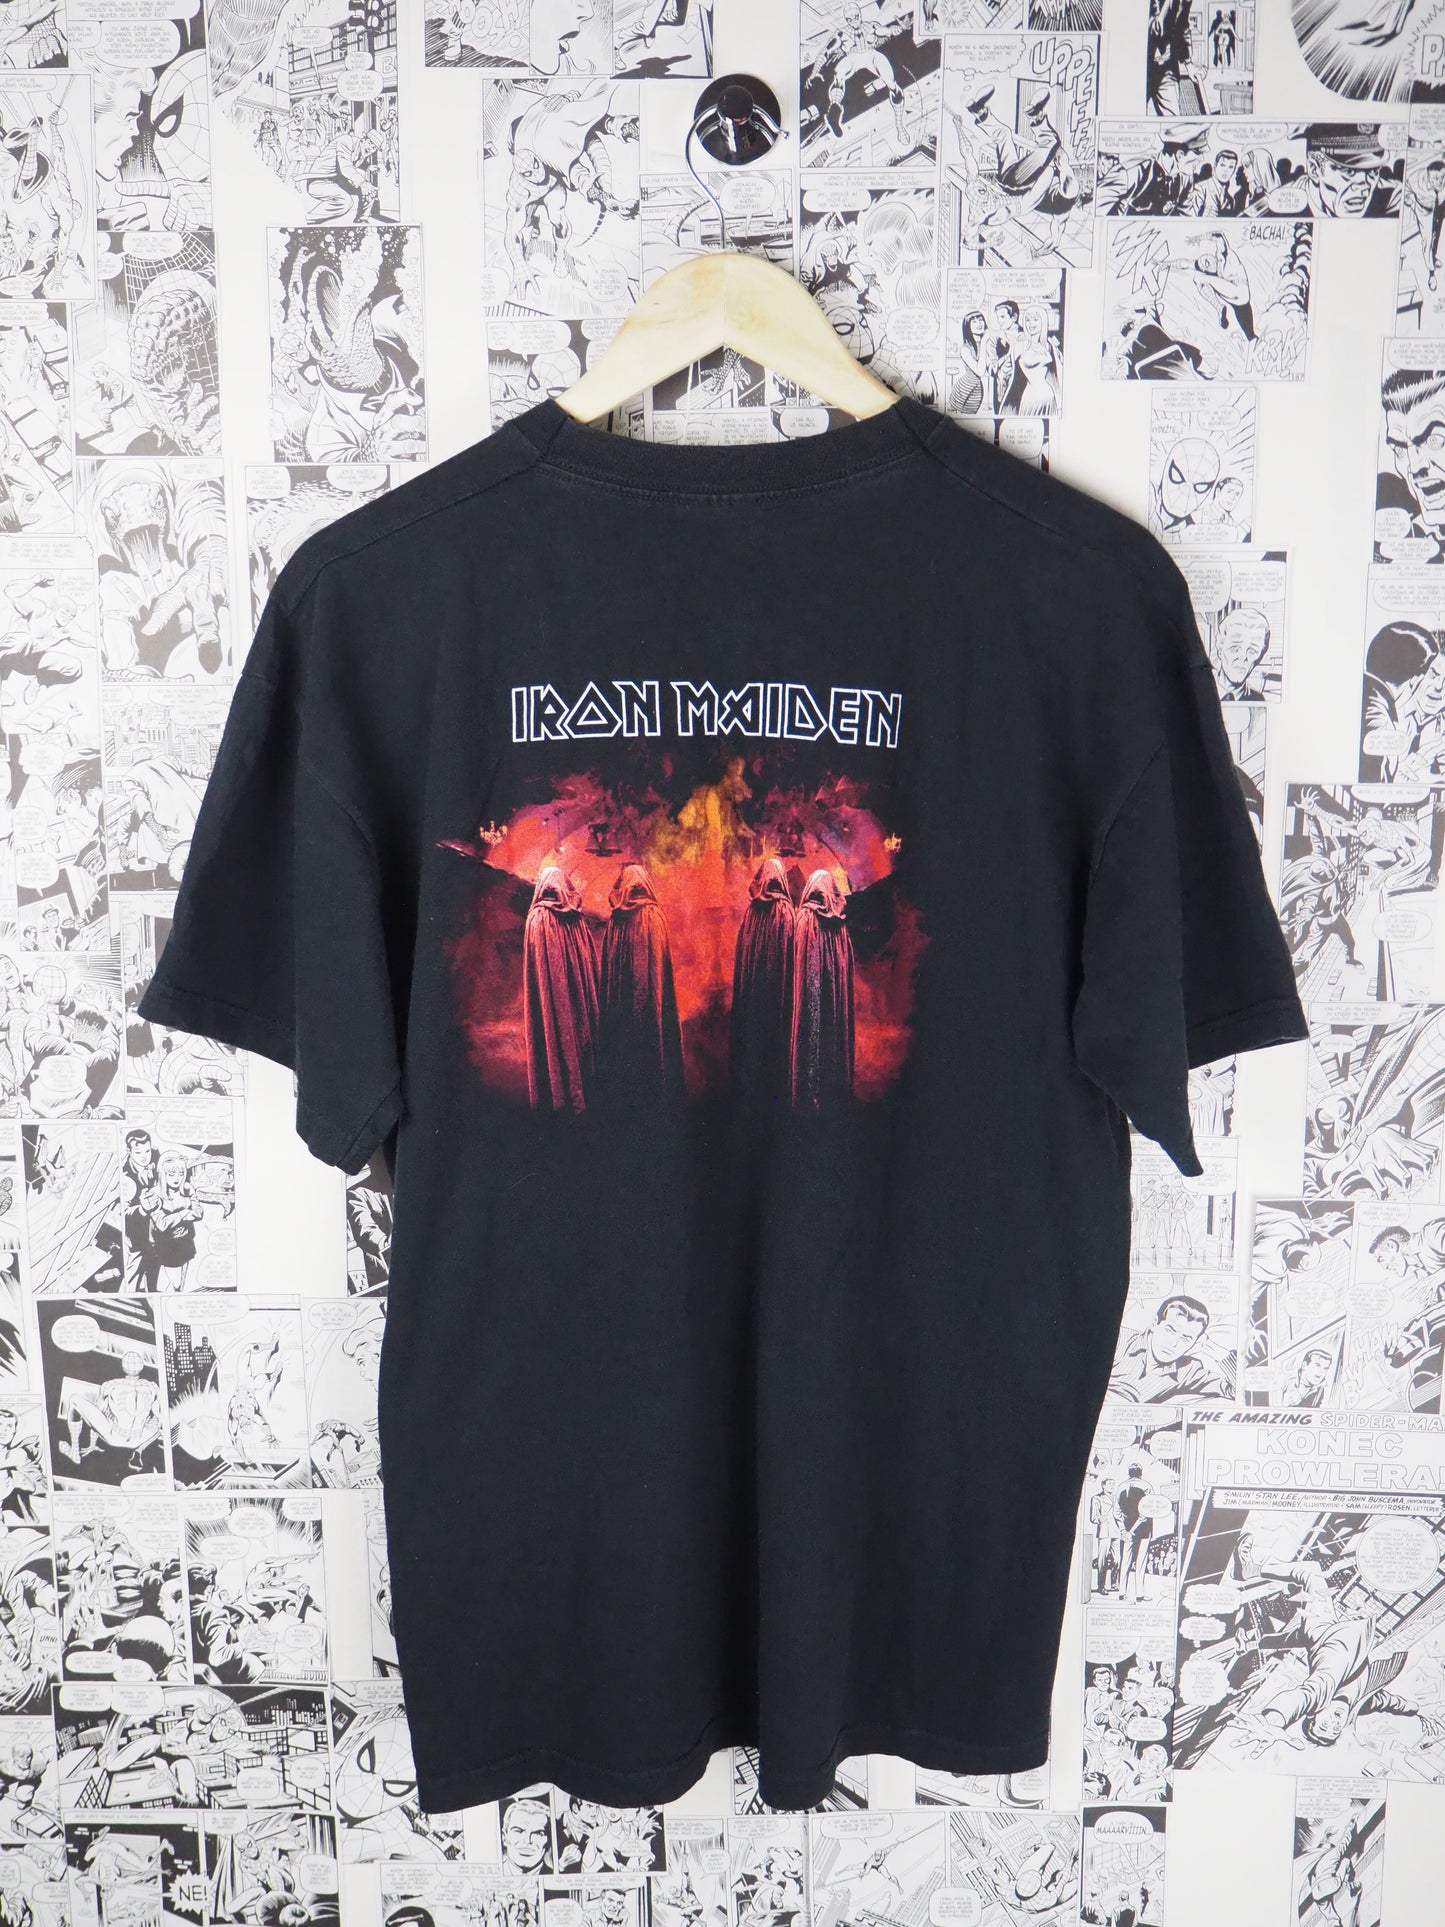 Vintage Iron Maiden "Dance of Death" 2003 t-shirt - size L